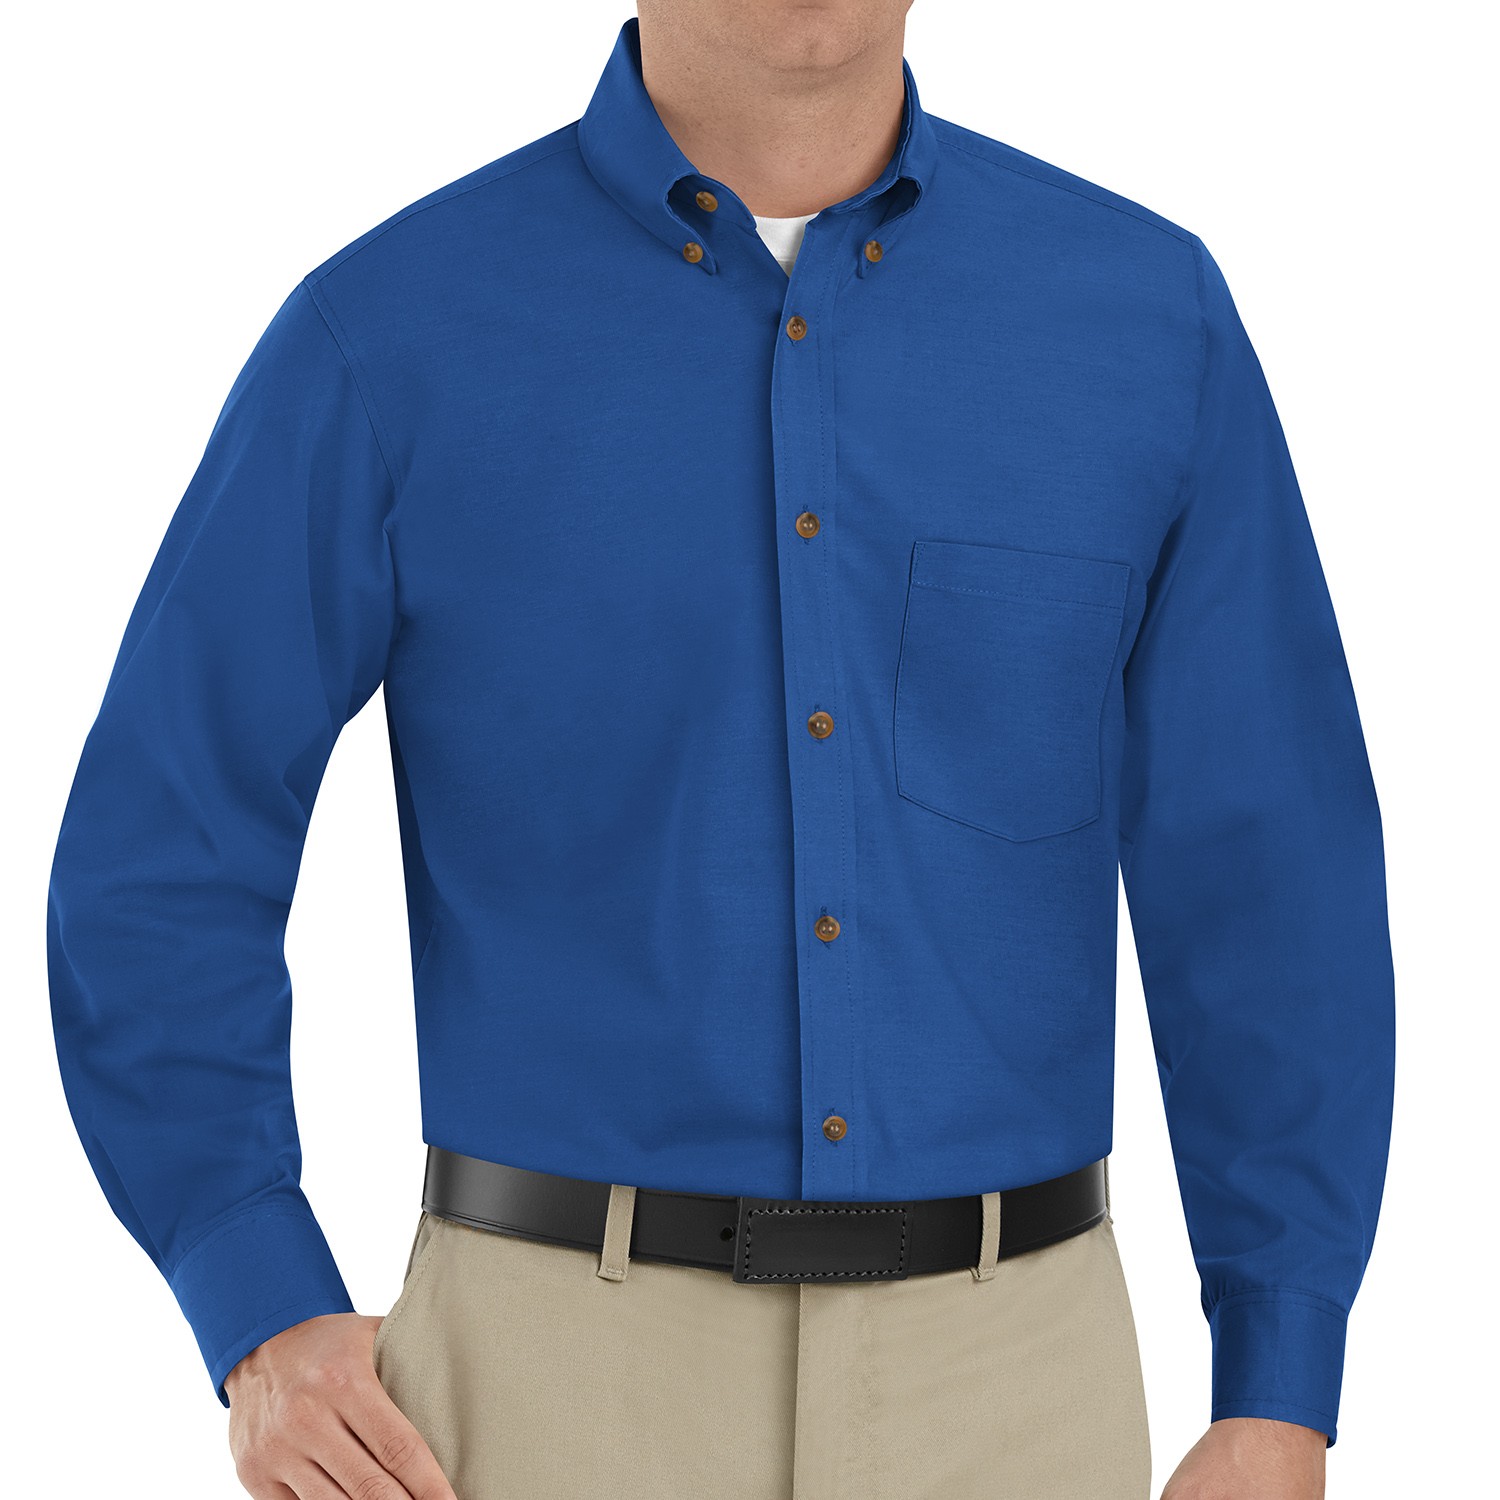 Prussia mall royal blue long sleeve dress shirt gap, T shirt louis vuitton noir, saree blouse designs 2019 images. 